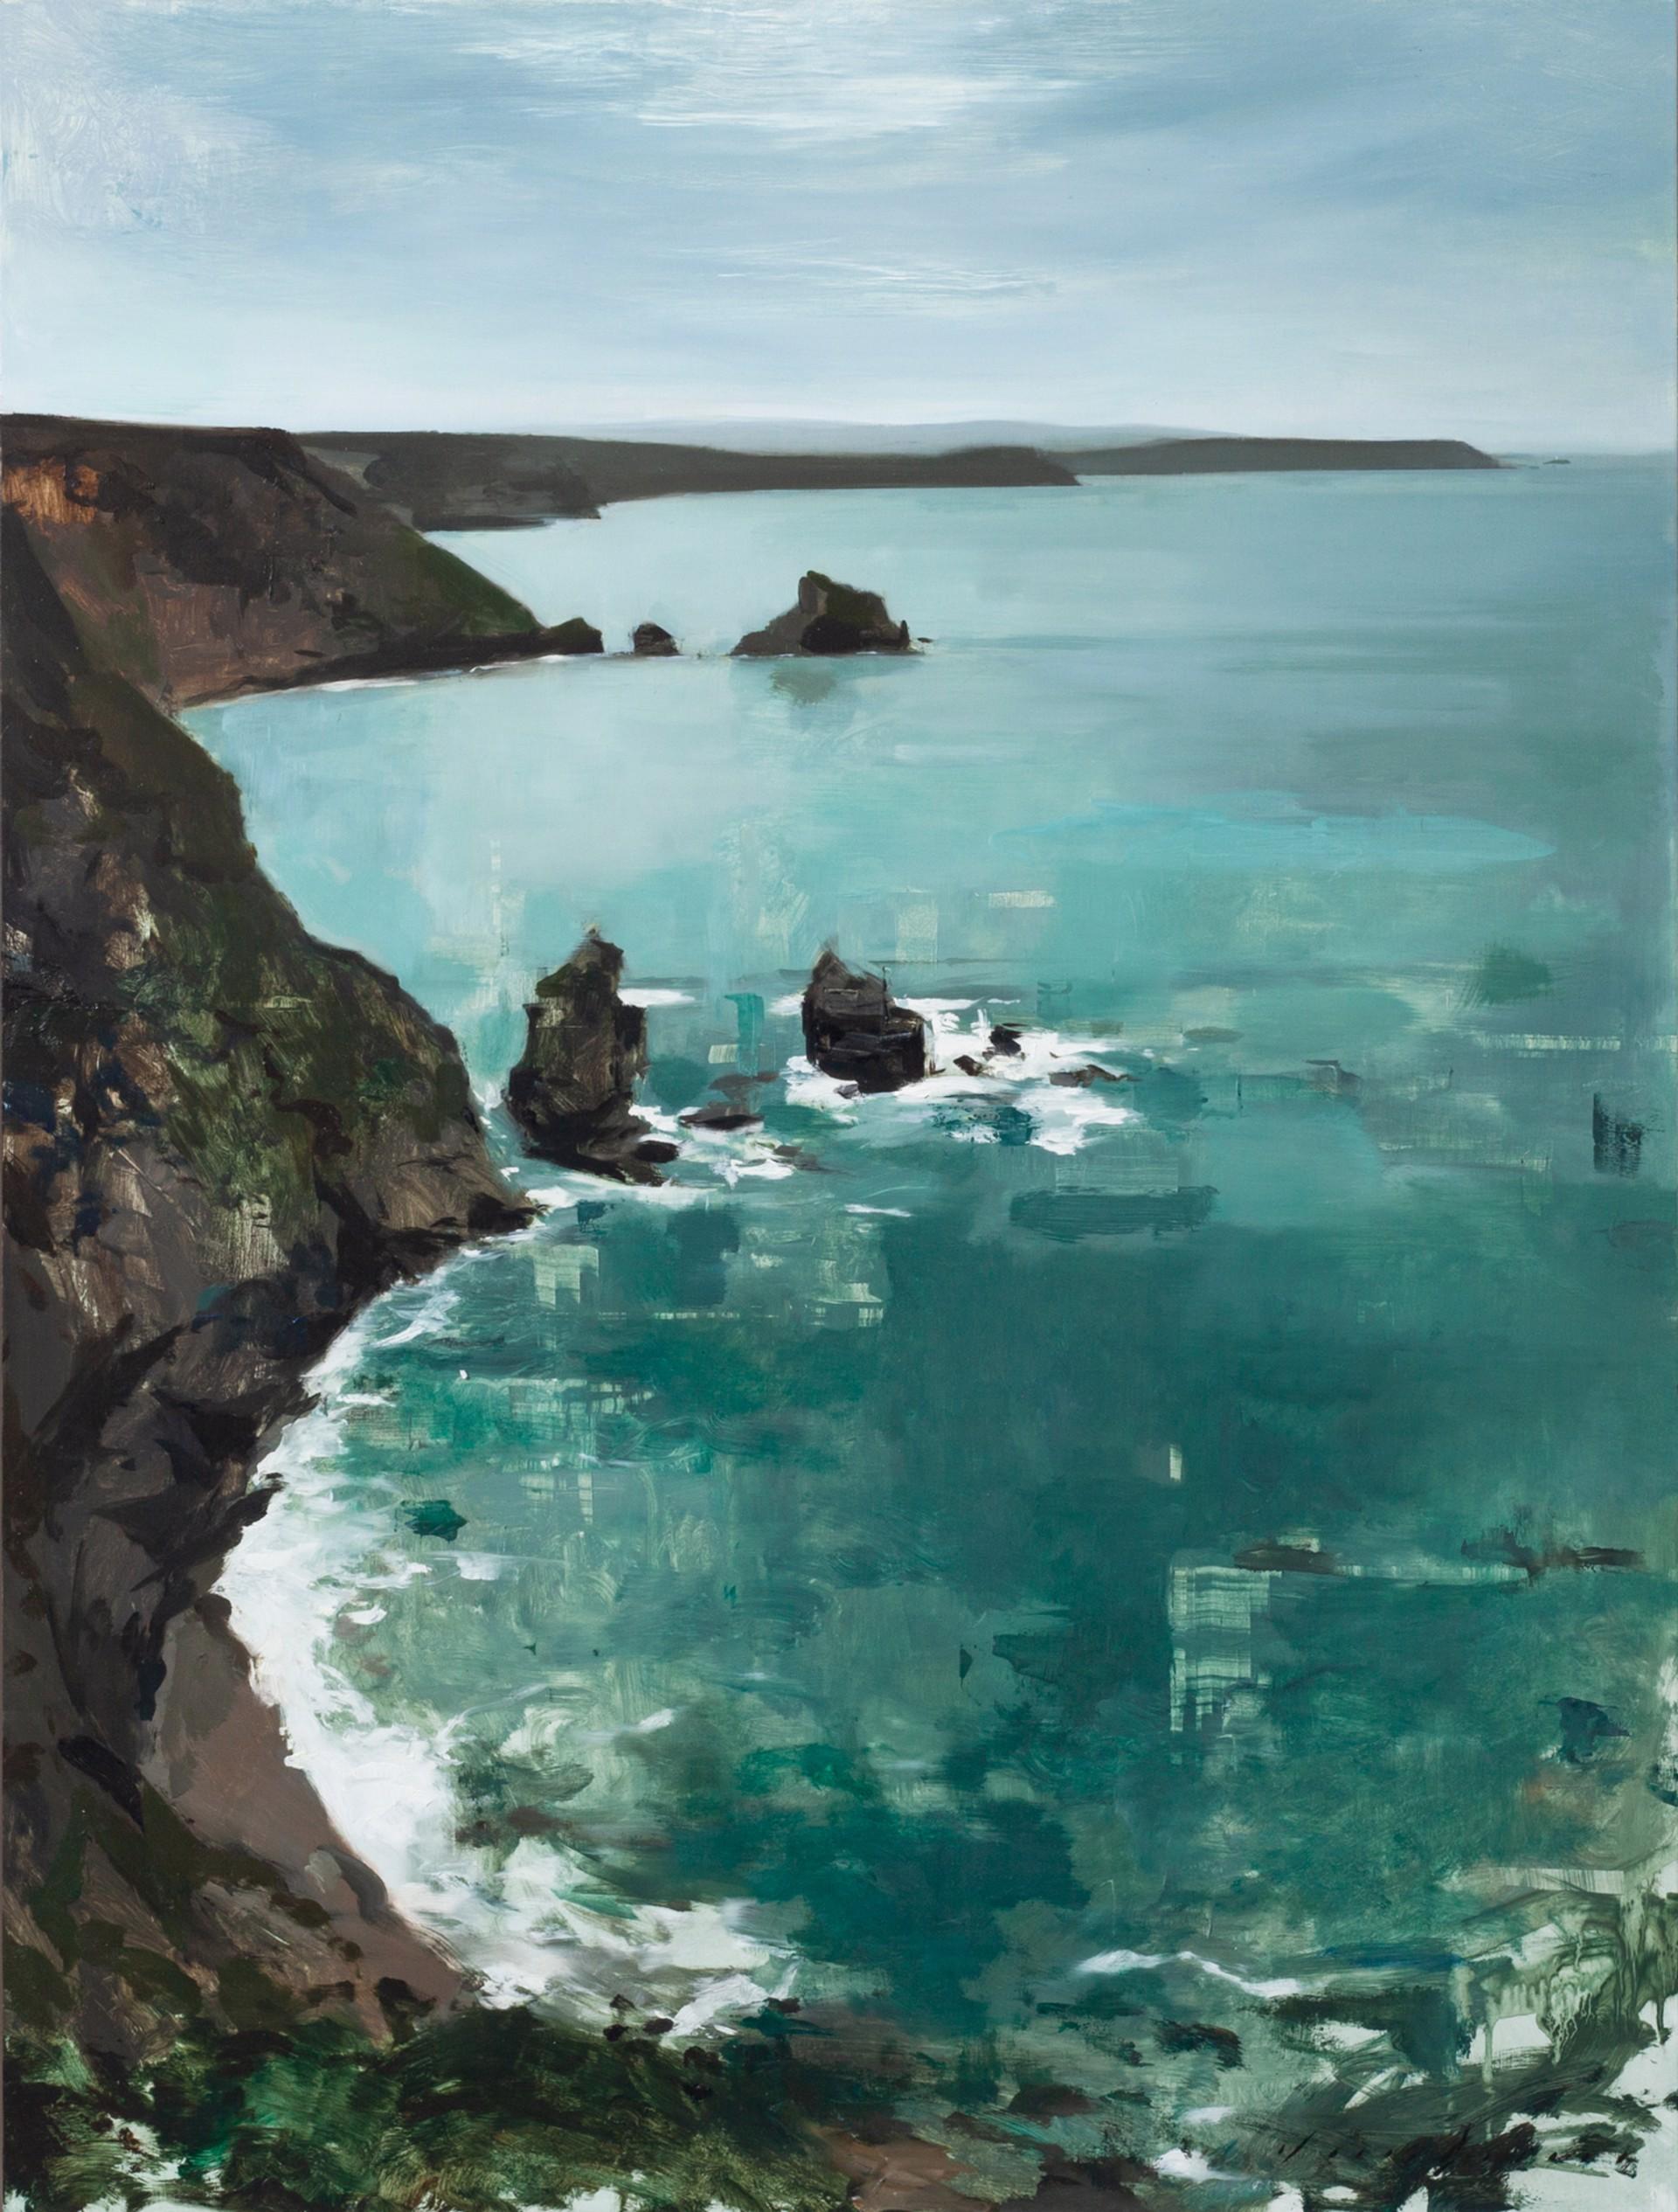 Jon Doran Landscape Painting - "Fragmentations on Bassets Cove" Original Oil painting